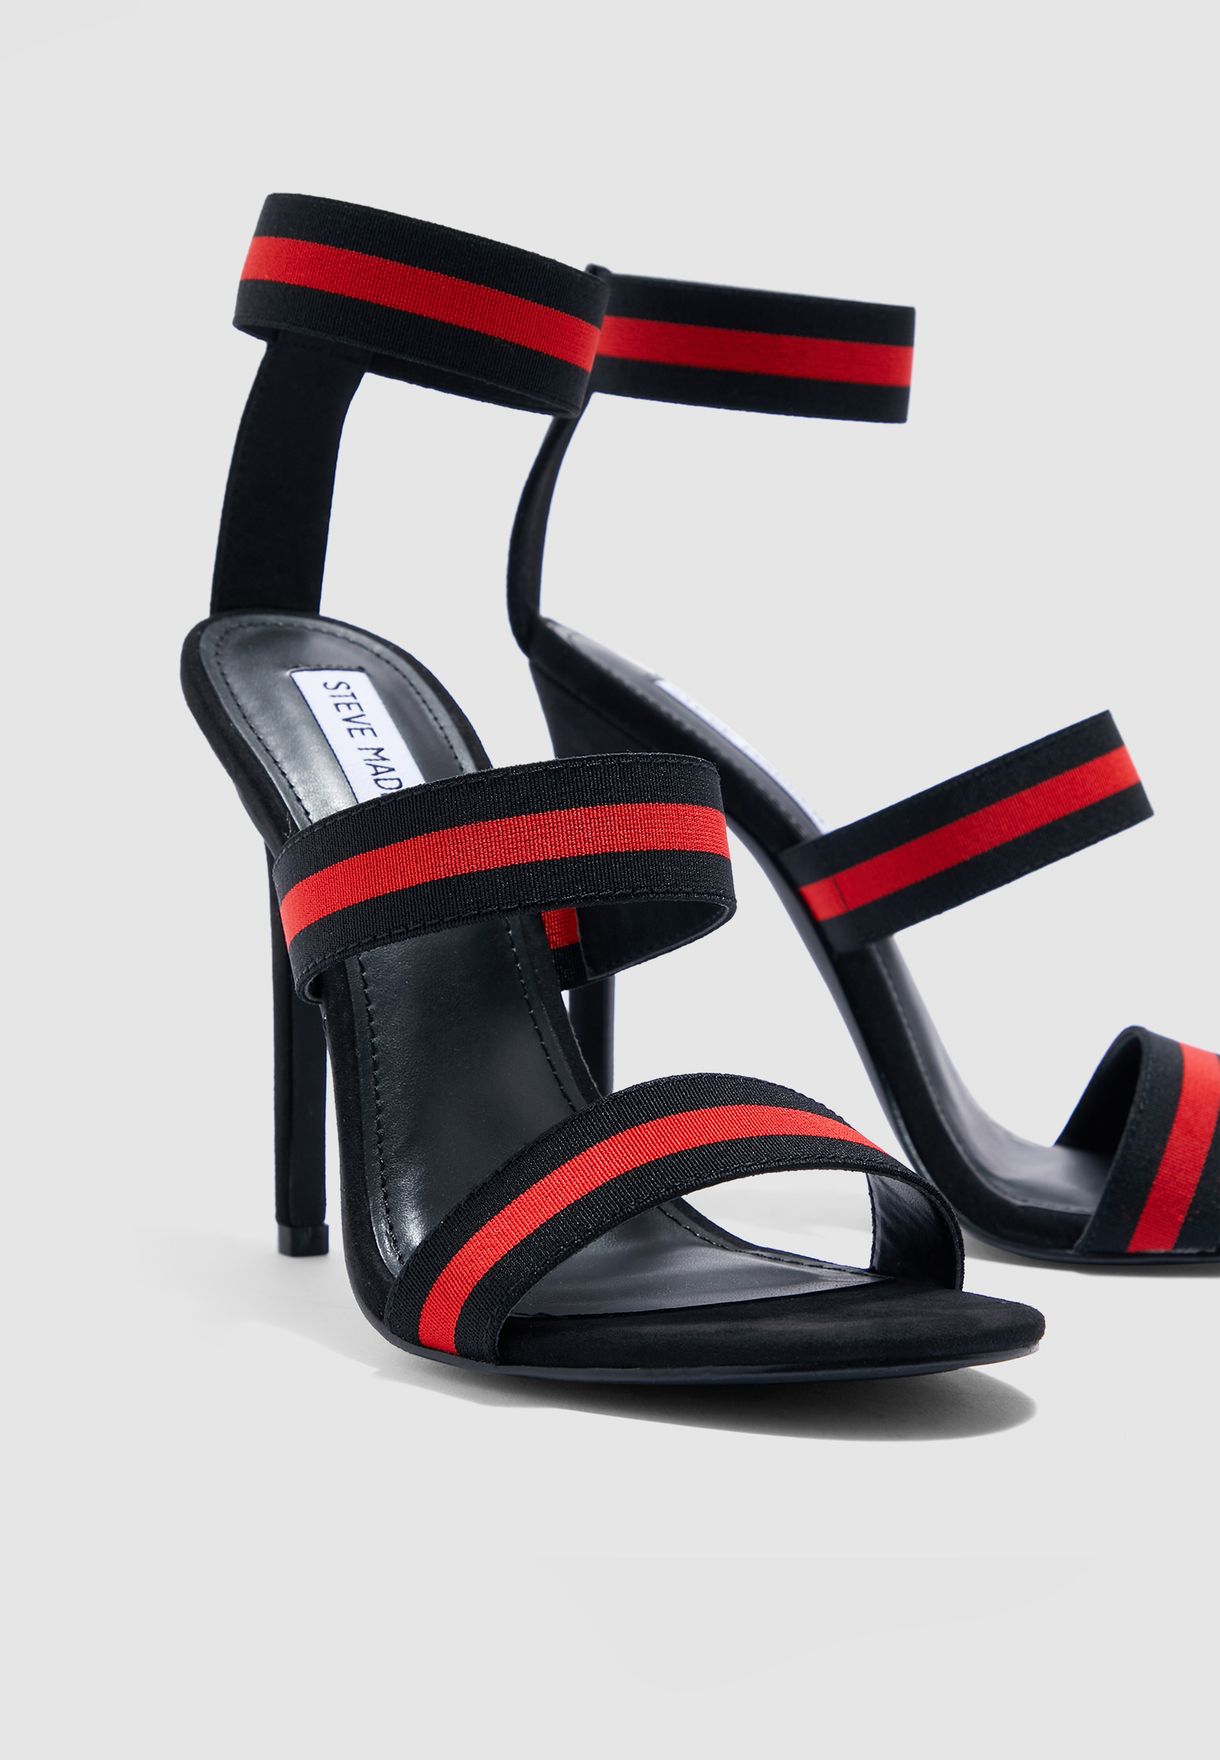 steve madden black and red heels